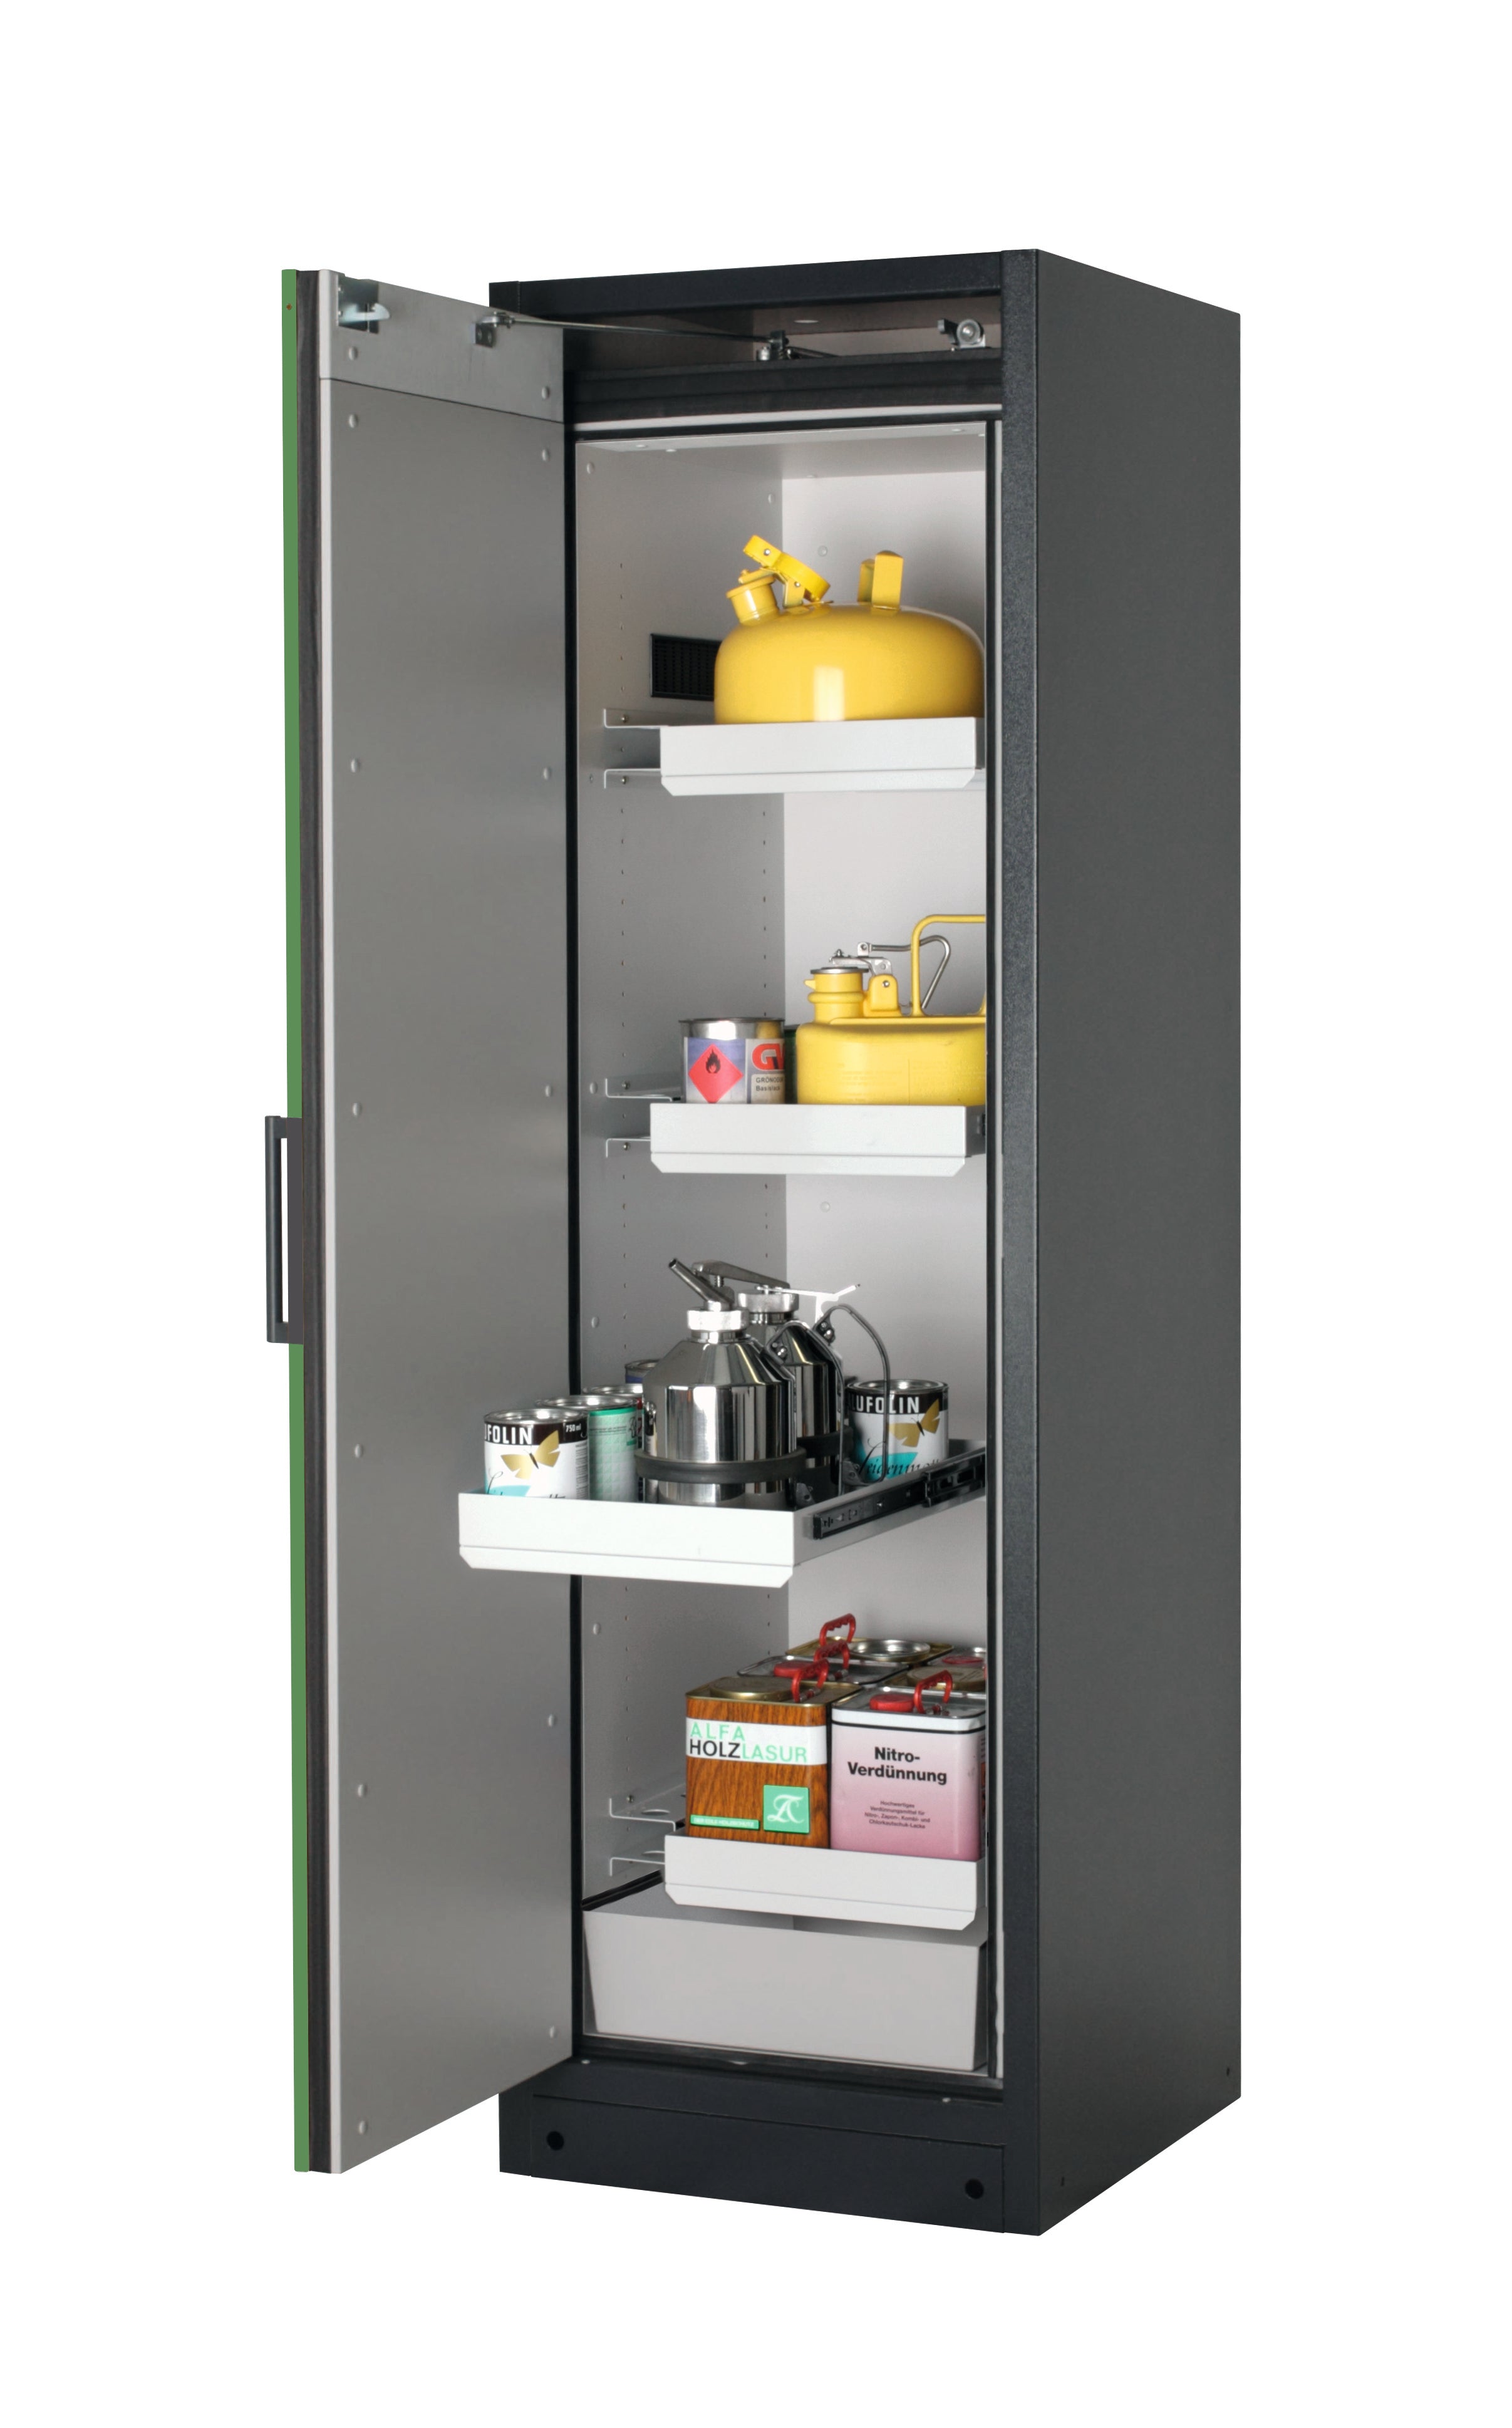 Type 90 safety storage cabinet Q-PEGASUS-90 model Q90.195.060.WDAC in reseda green RAL 6011 with 3x drawer (standard) (sheet steel),